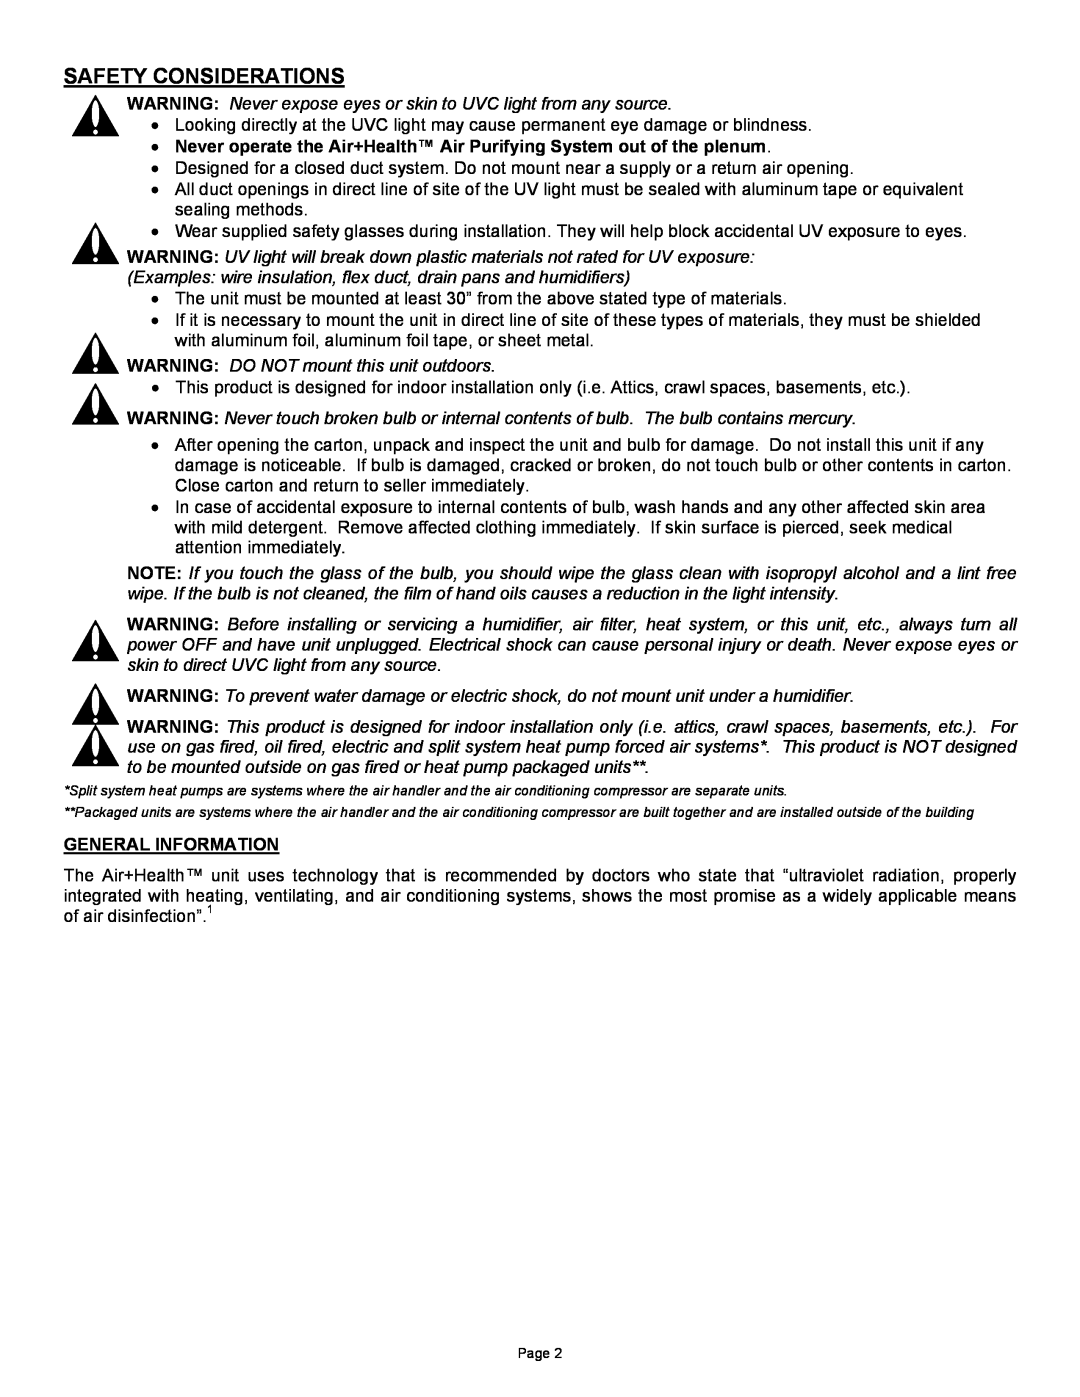 Air Health AH-RL, AH-1 instruction sheet Safety Considerations, General Information 